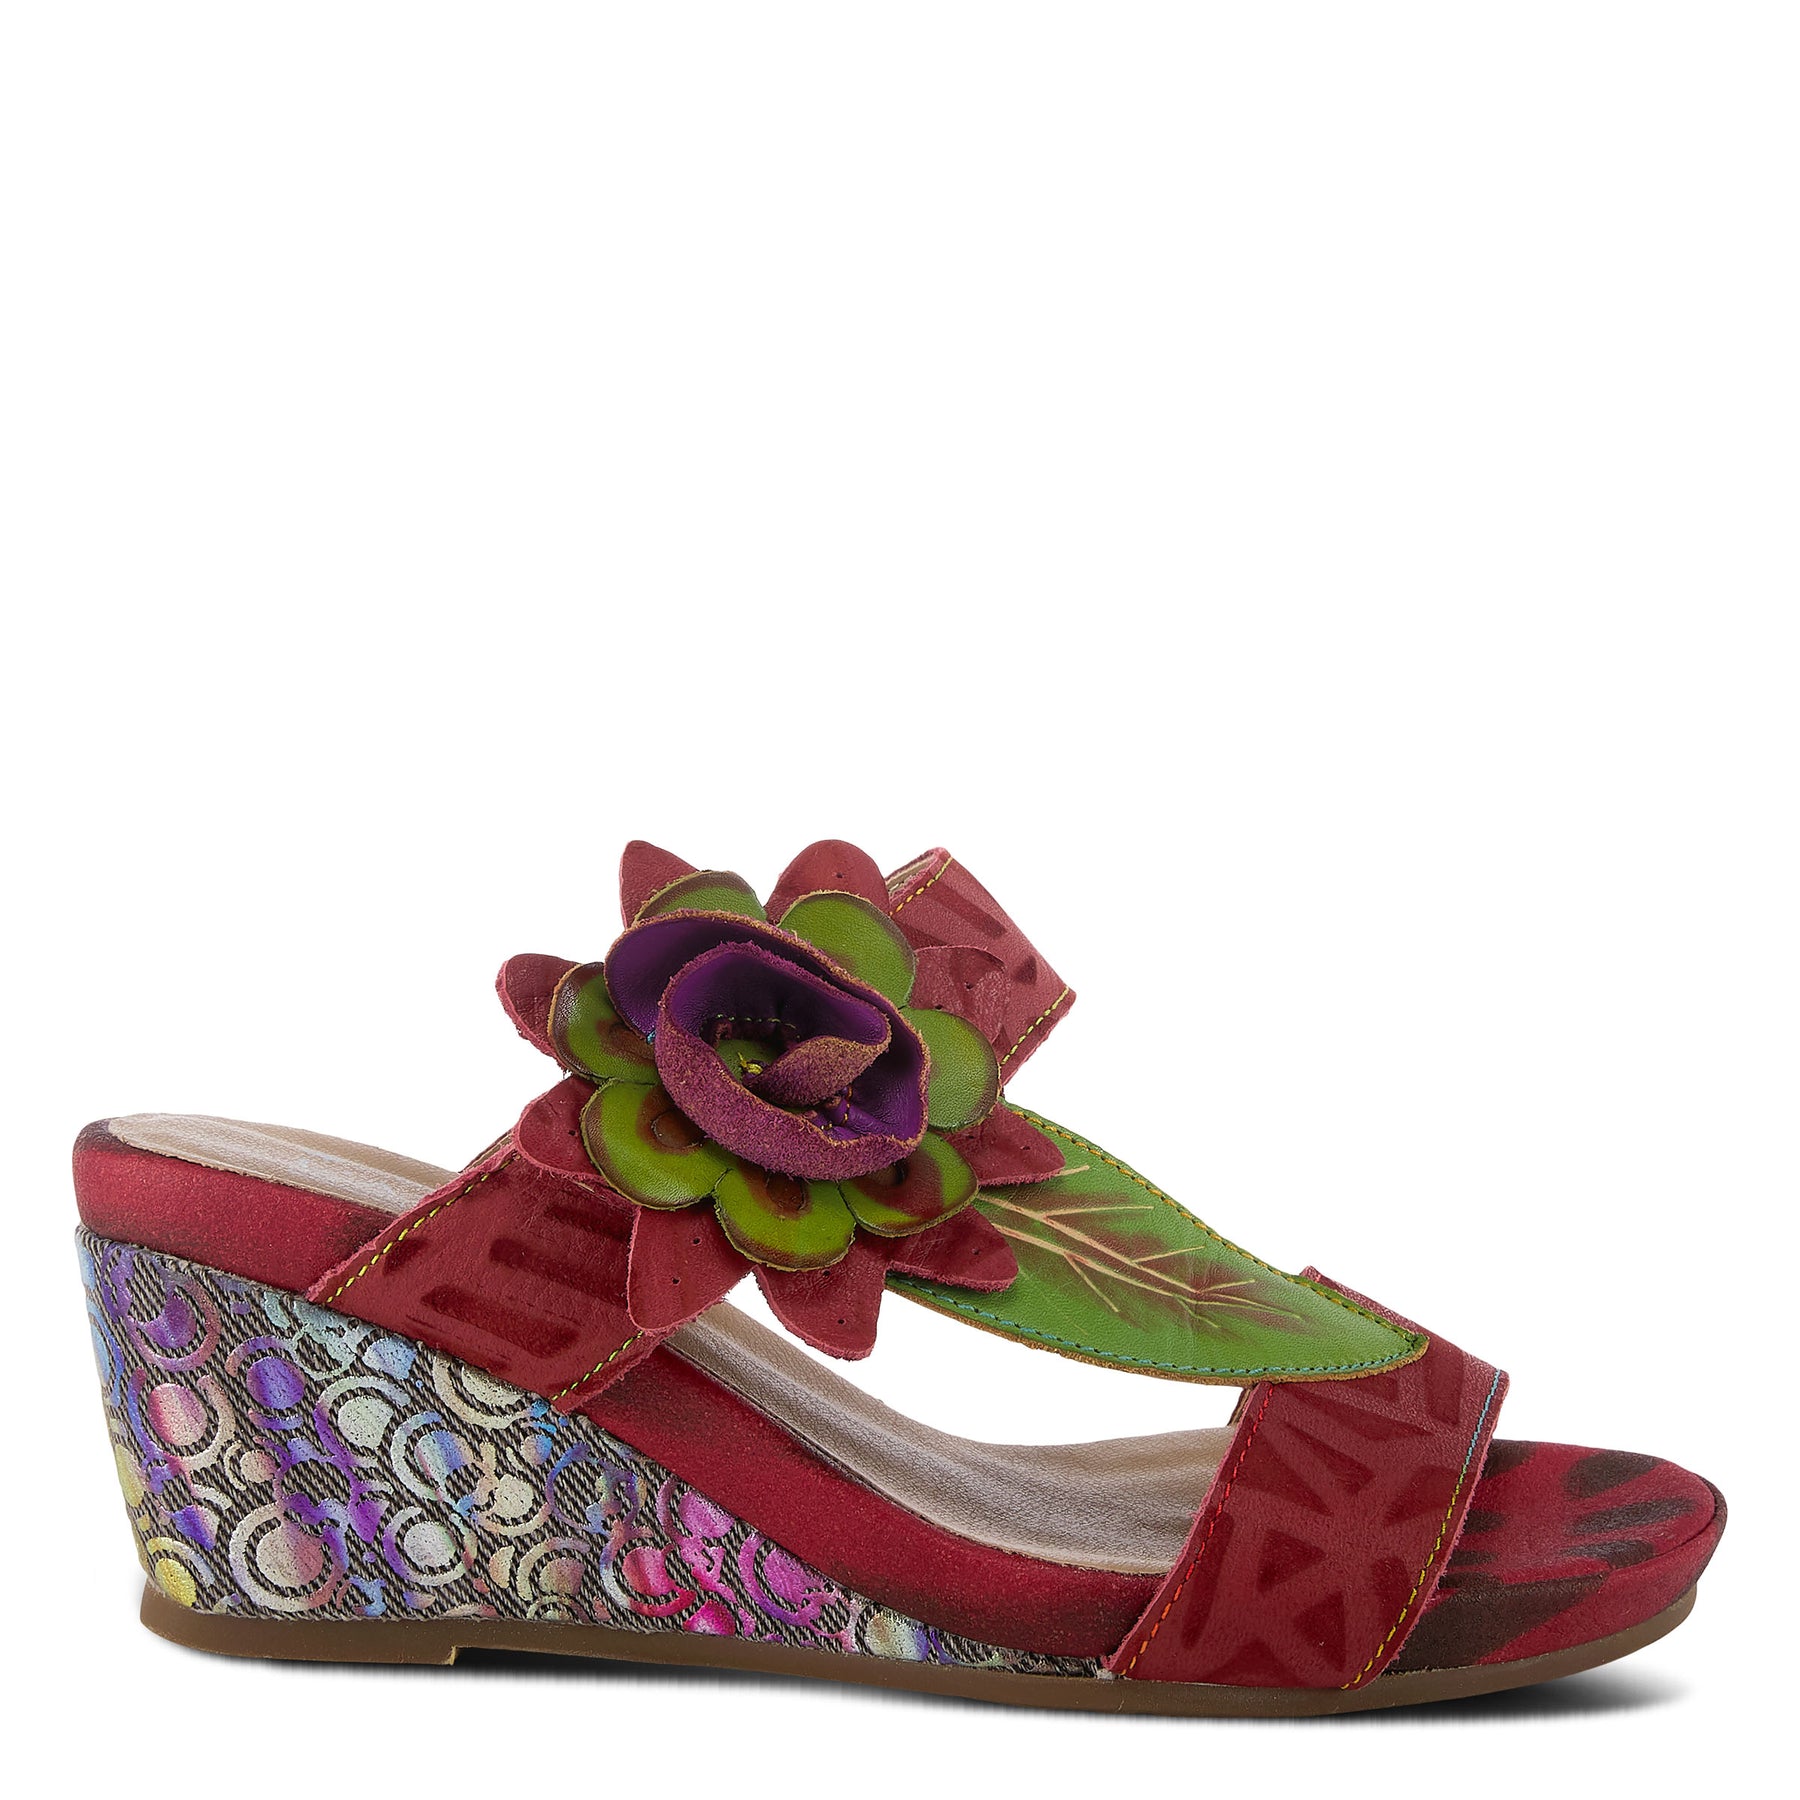 CAMEL SHAYLA SANDAL by L'ARTISTE – Spring Step Shoes